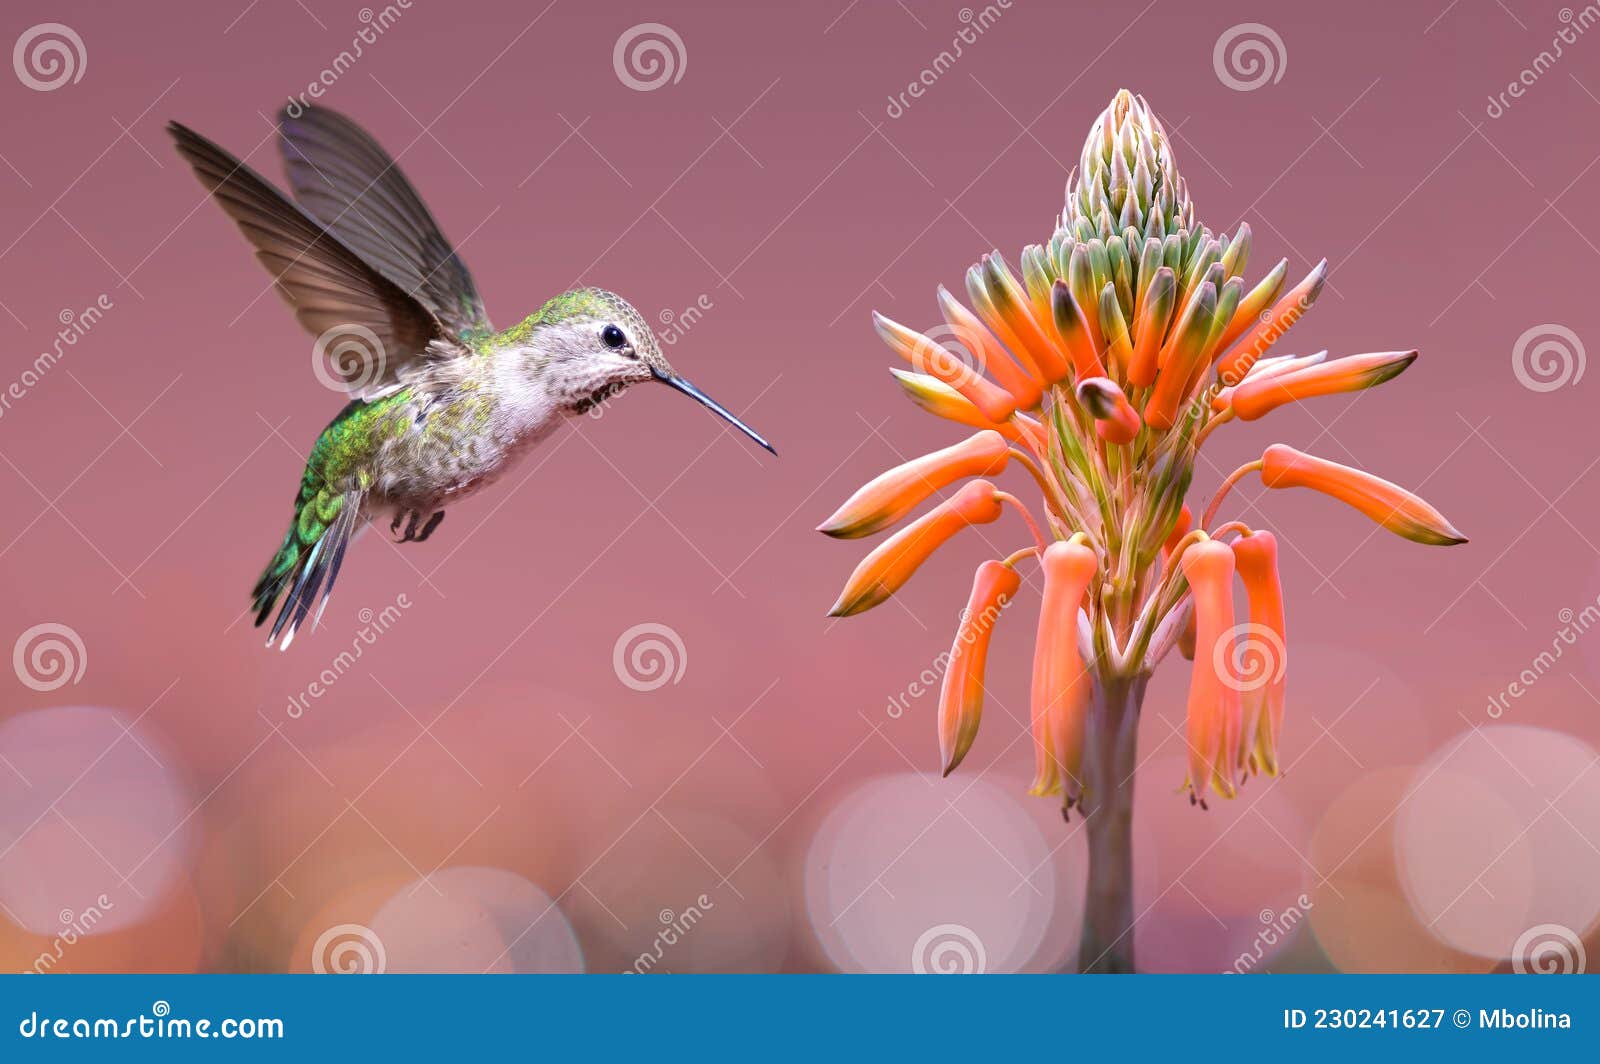 hummingbird hovering close to aloe vera plant